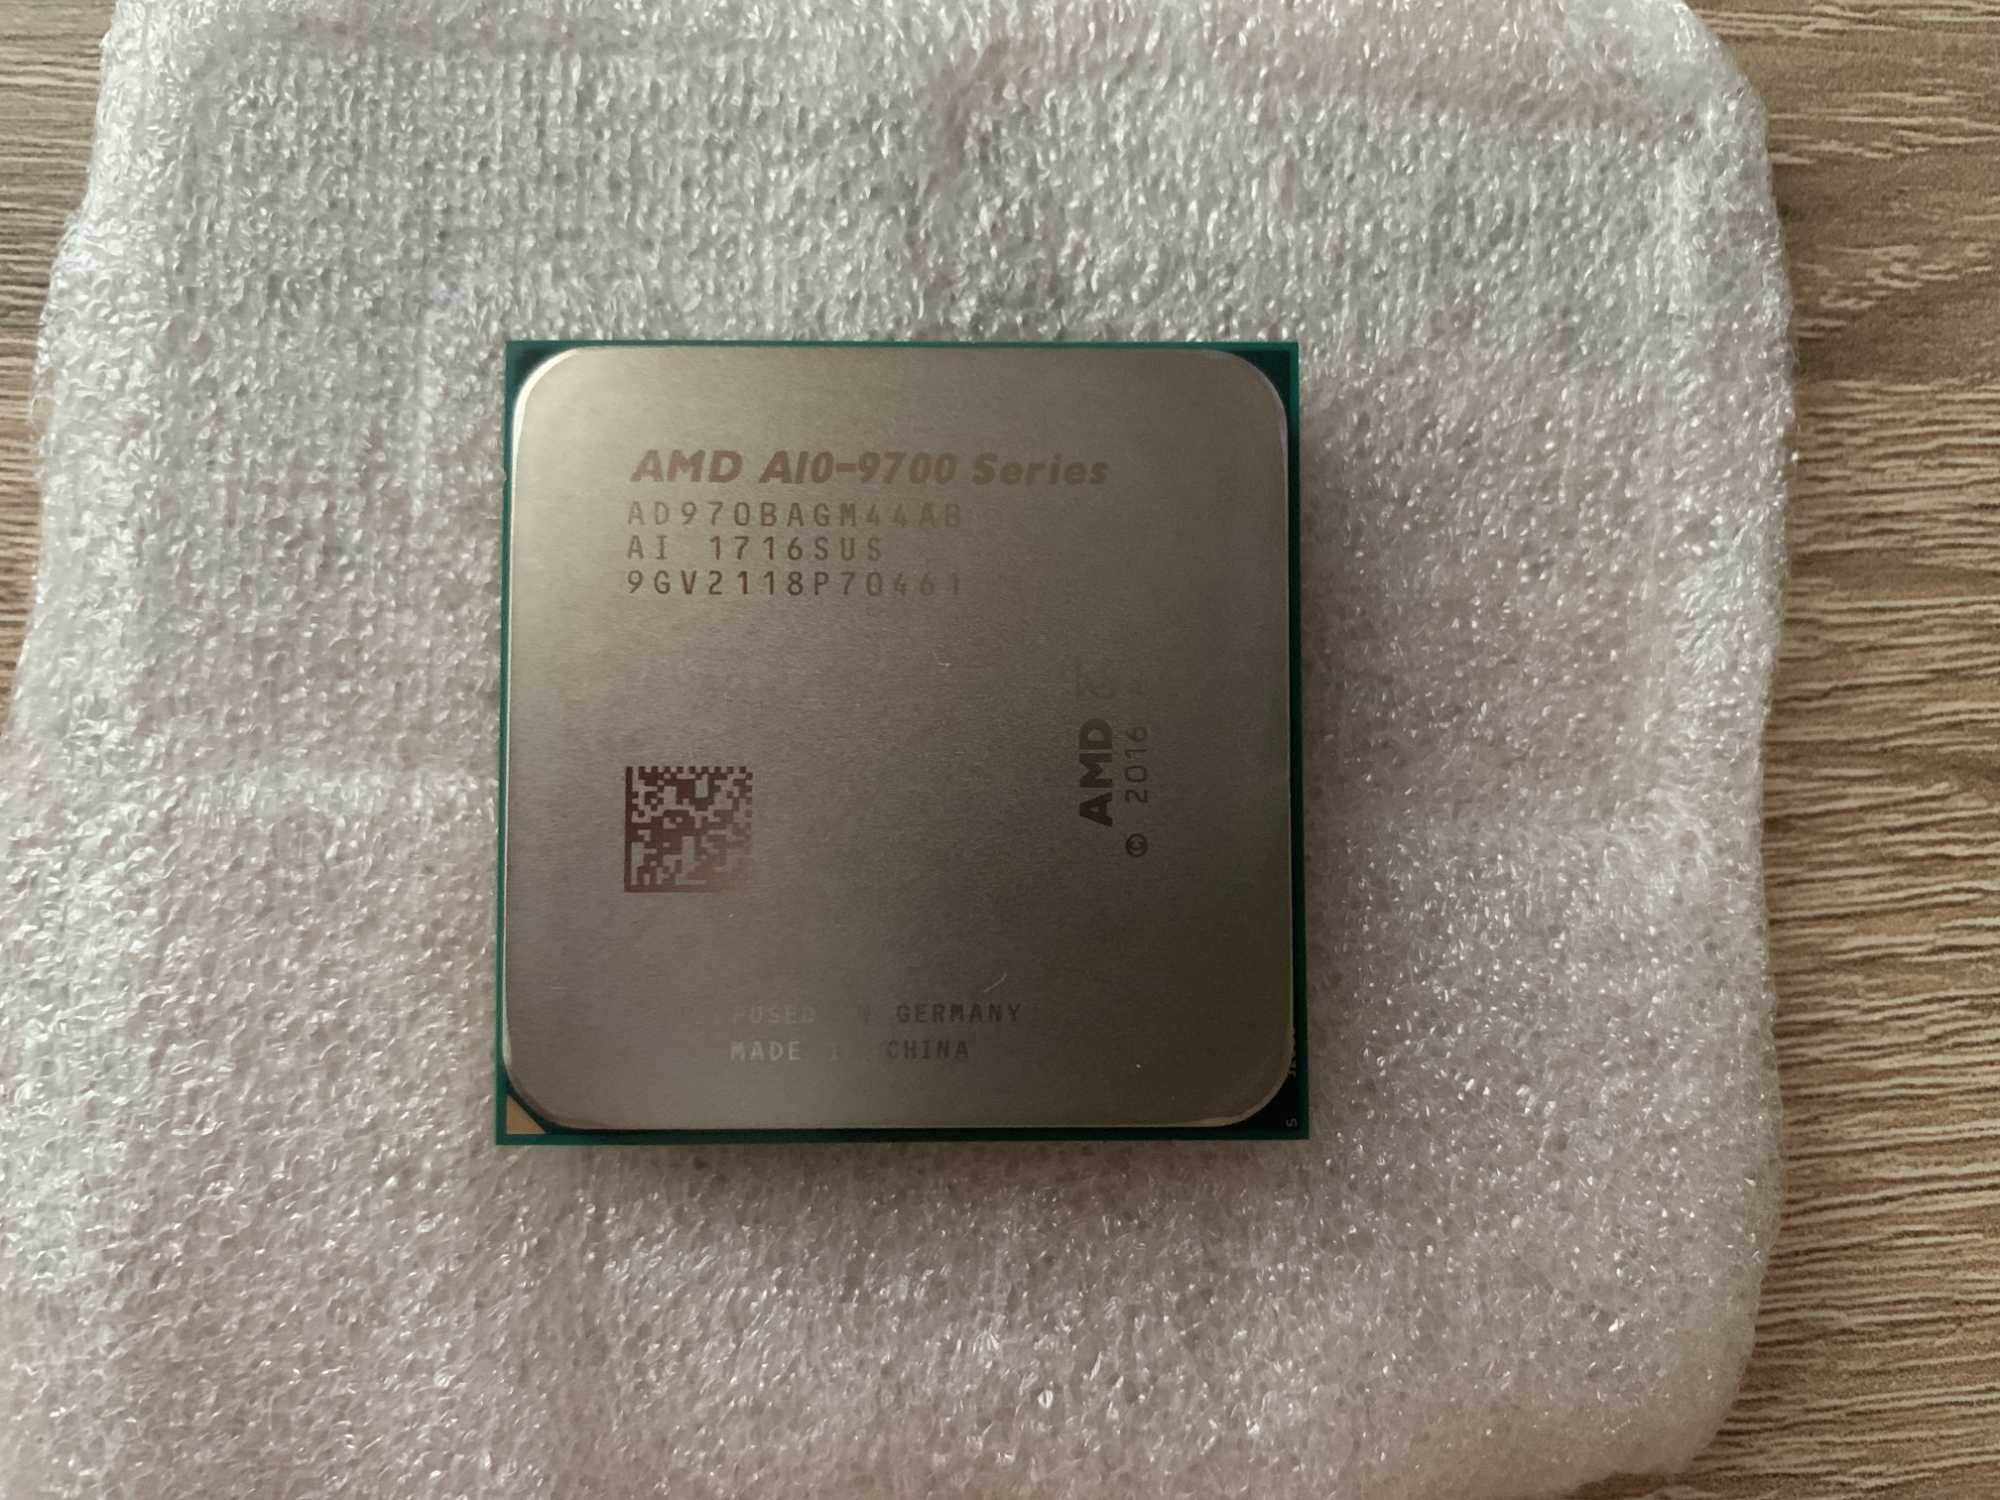 AMD A10-9700 Series